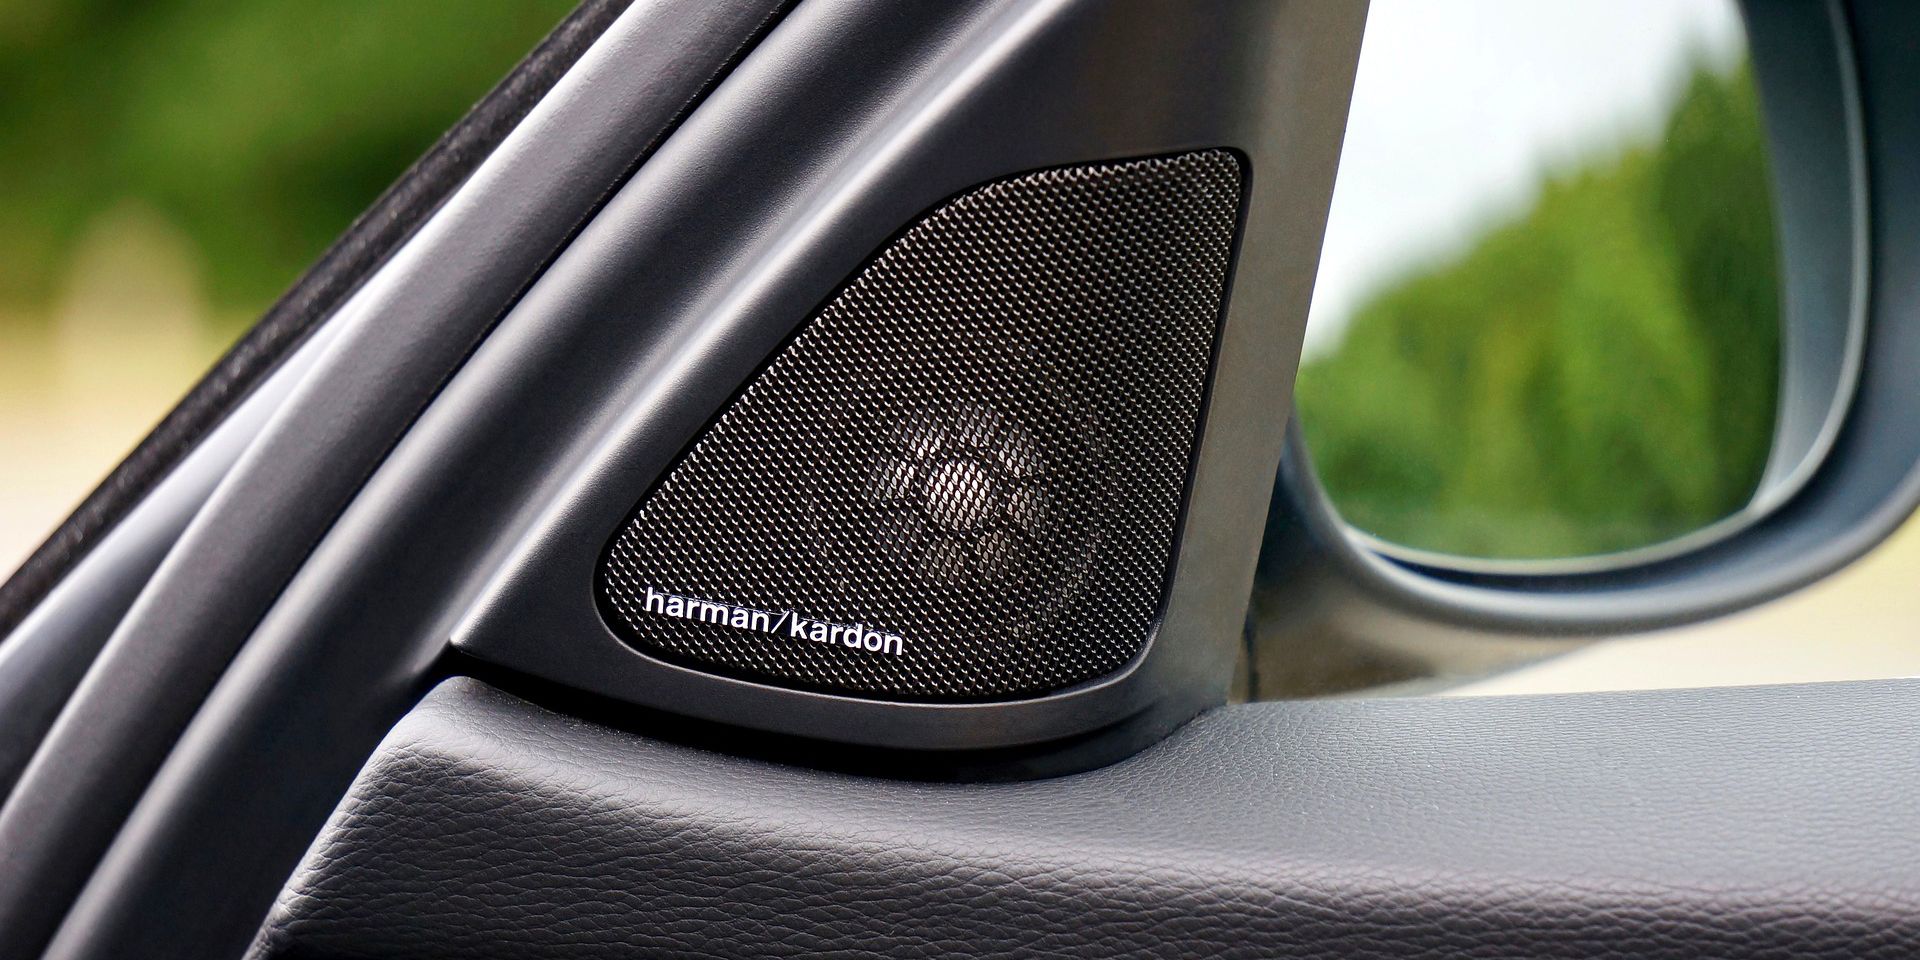 harmon kardon car speaker picture